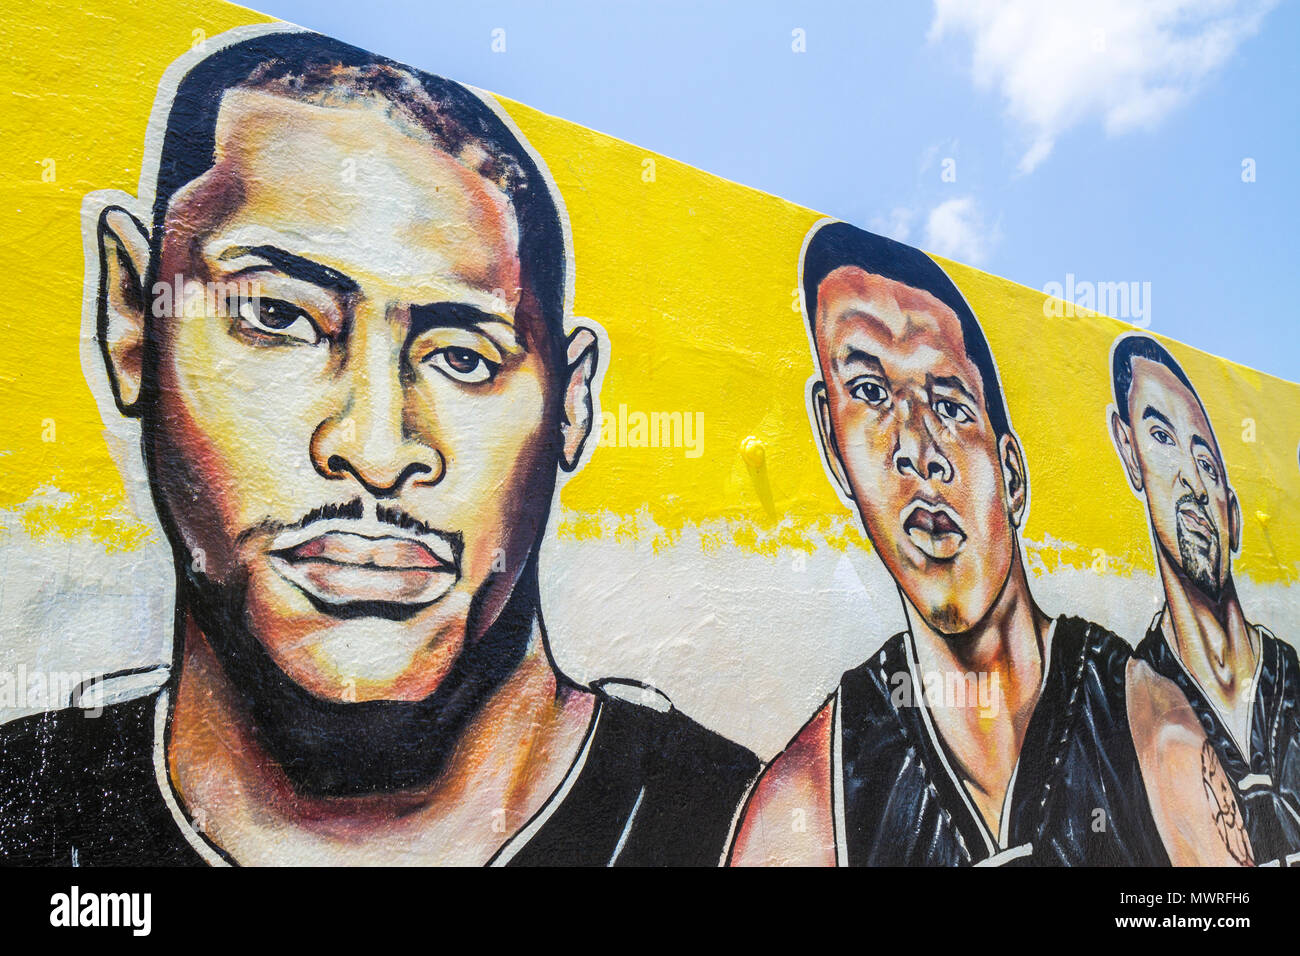 Miami Florida,Midtown,Miami Heat basketball players,public art,Black man men male adult adults,NBA,athletes,sports,FL110516013EdOnly Stock Photo